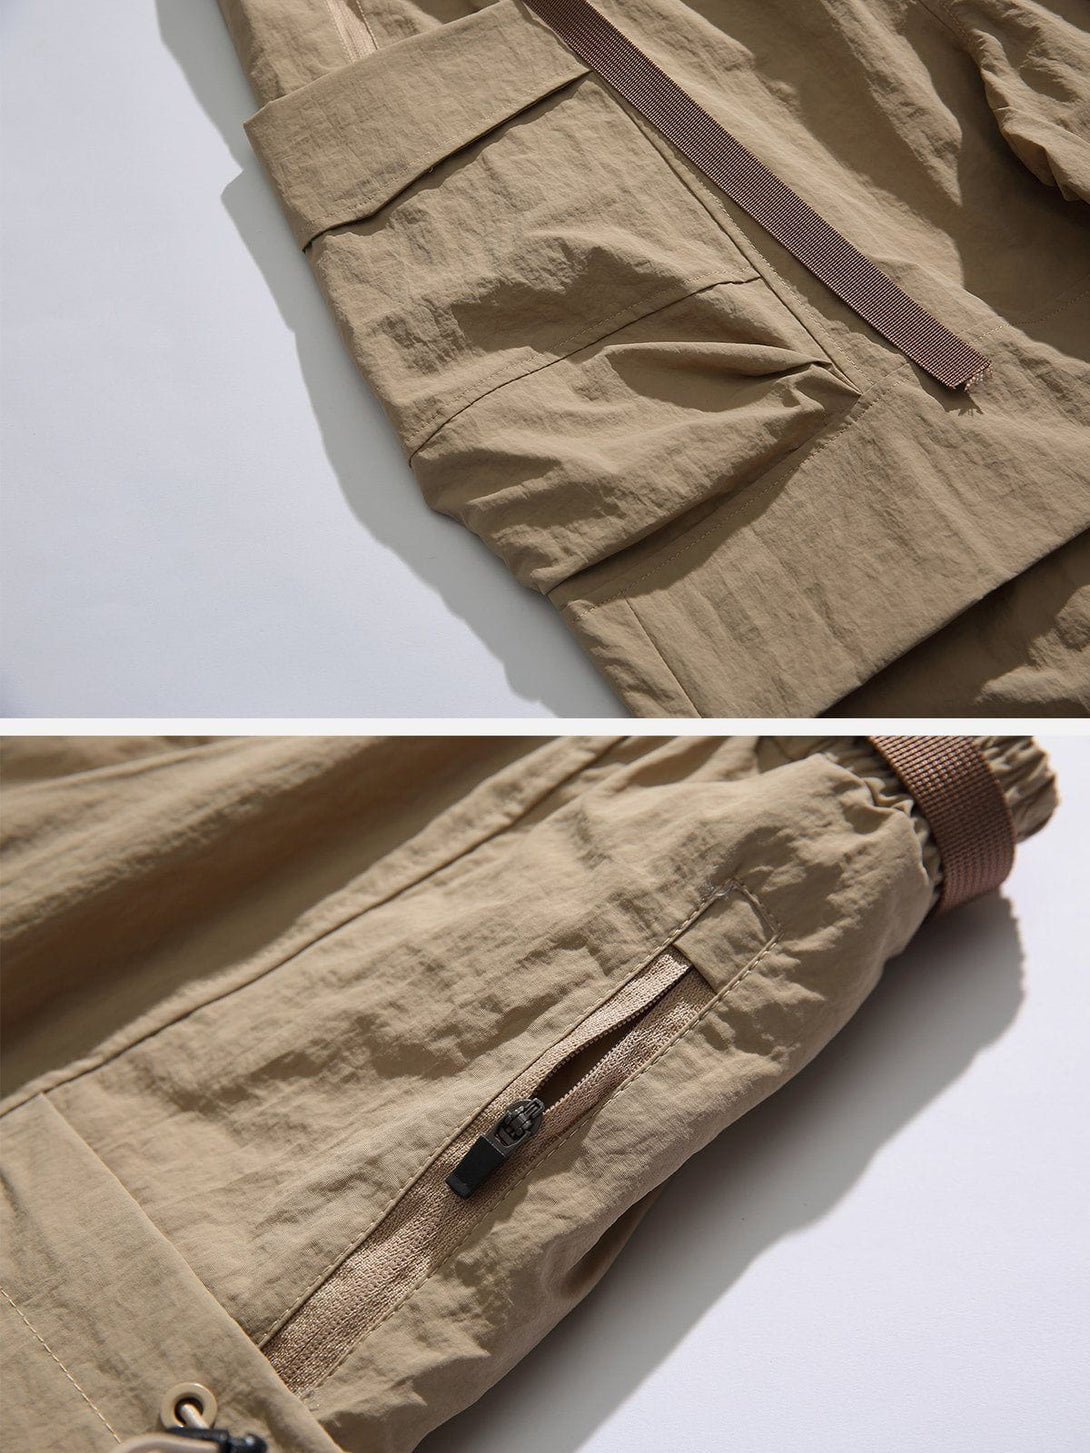 Levefly - Large Pockets Pleated Cargo Pants - Streetwear Fashion - levefly.com